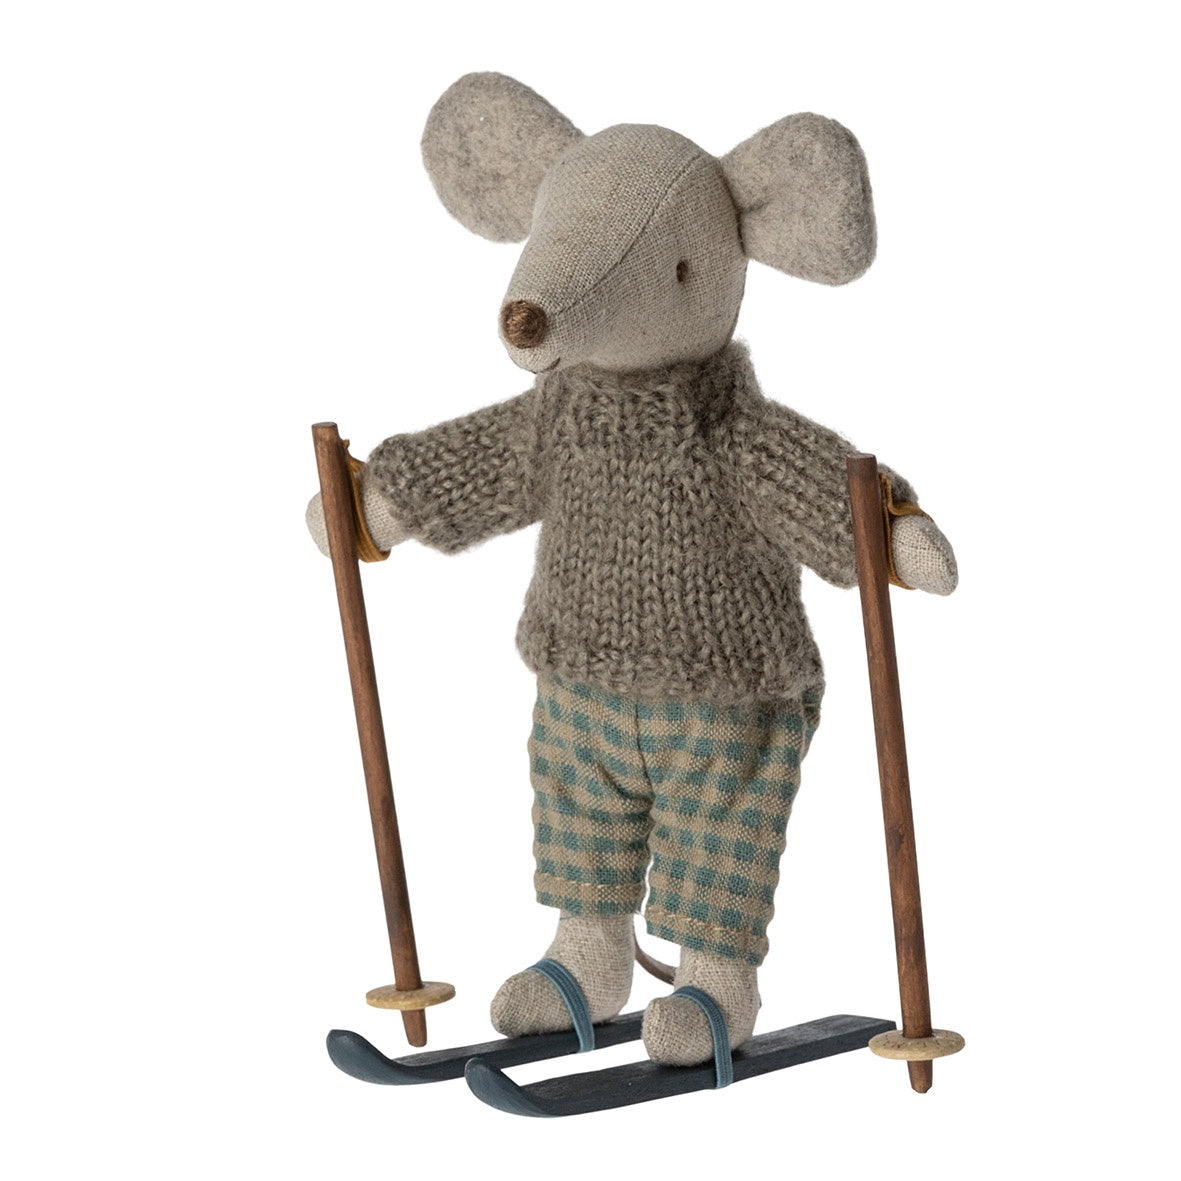 Maileg Winter Mouse with Ski Set, Big Brother PRE-ORDER eta  Dec 23 (8534066102559)